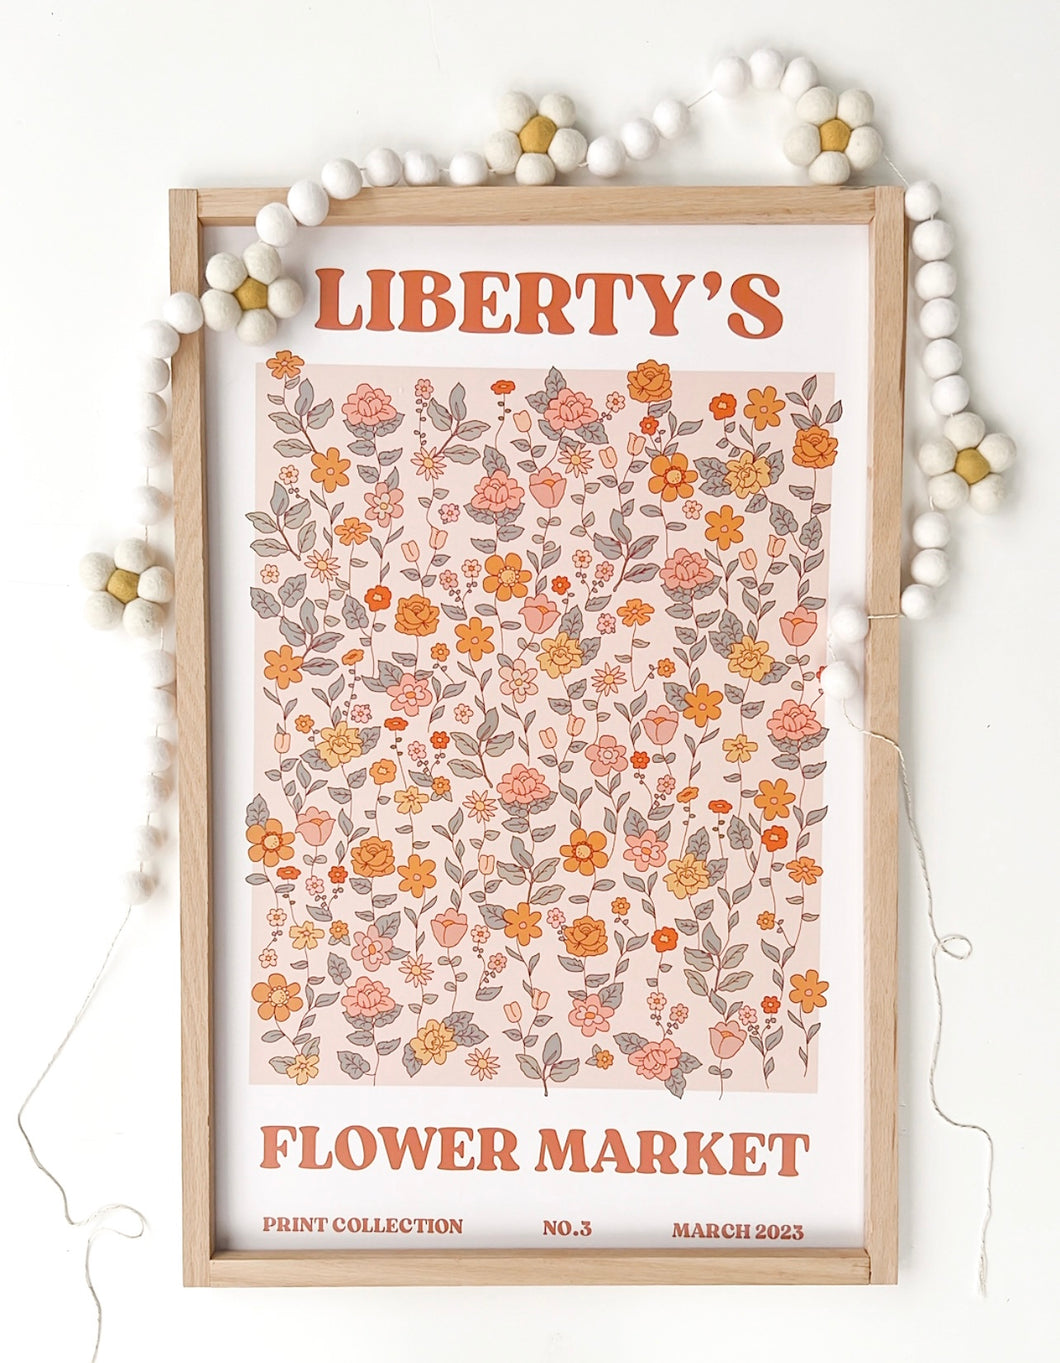 Flower Market- the Liberty